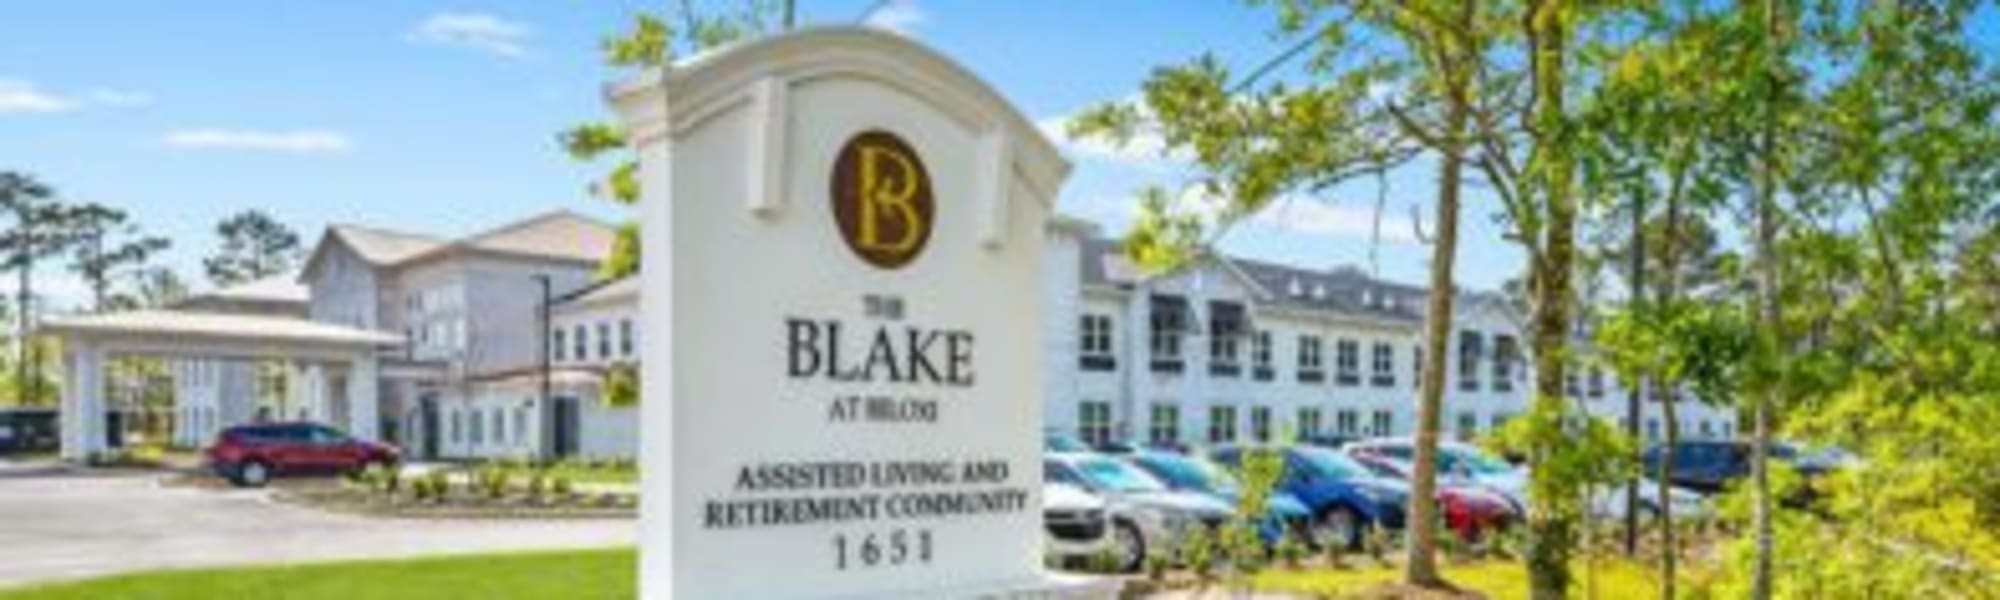 The Blake at Panama City Beach building in Panama City Beach, Florida